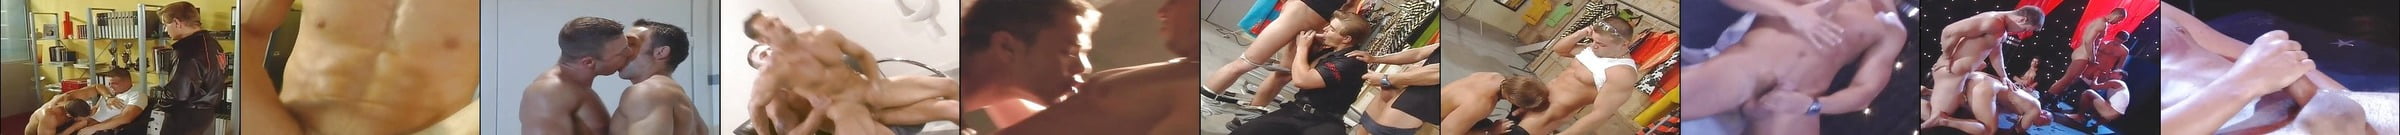 Tony Mecelli Fucks Jed Willcox On A Motorcycle Gay Porn Bb Xhamster 